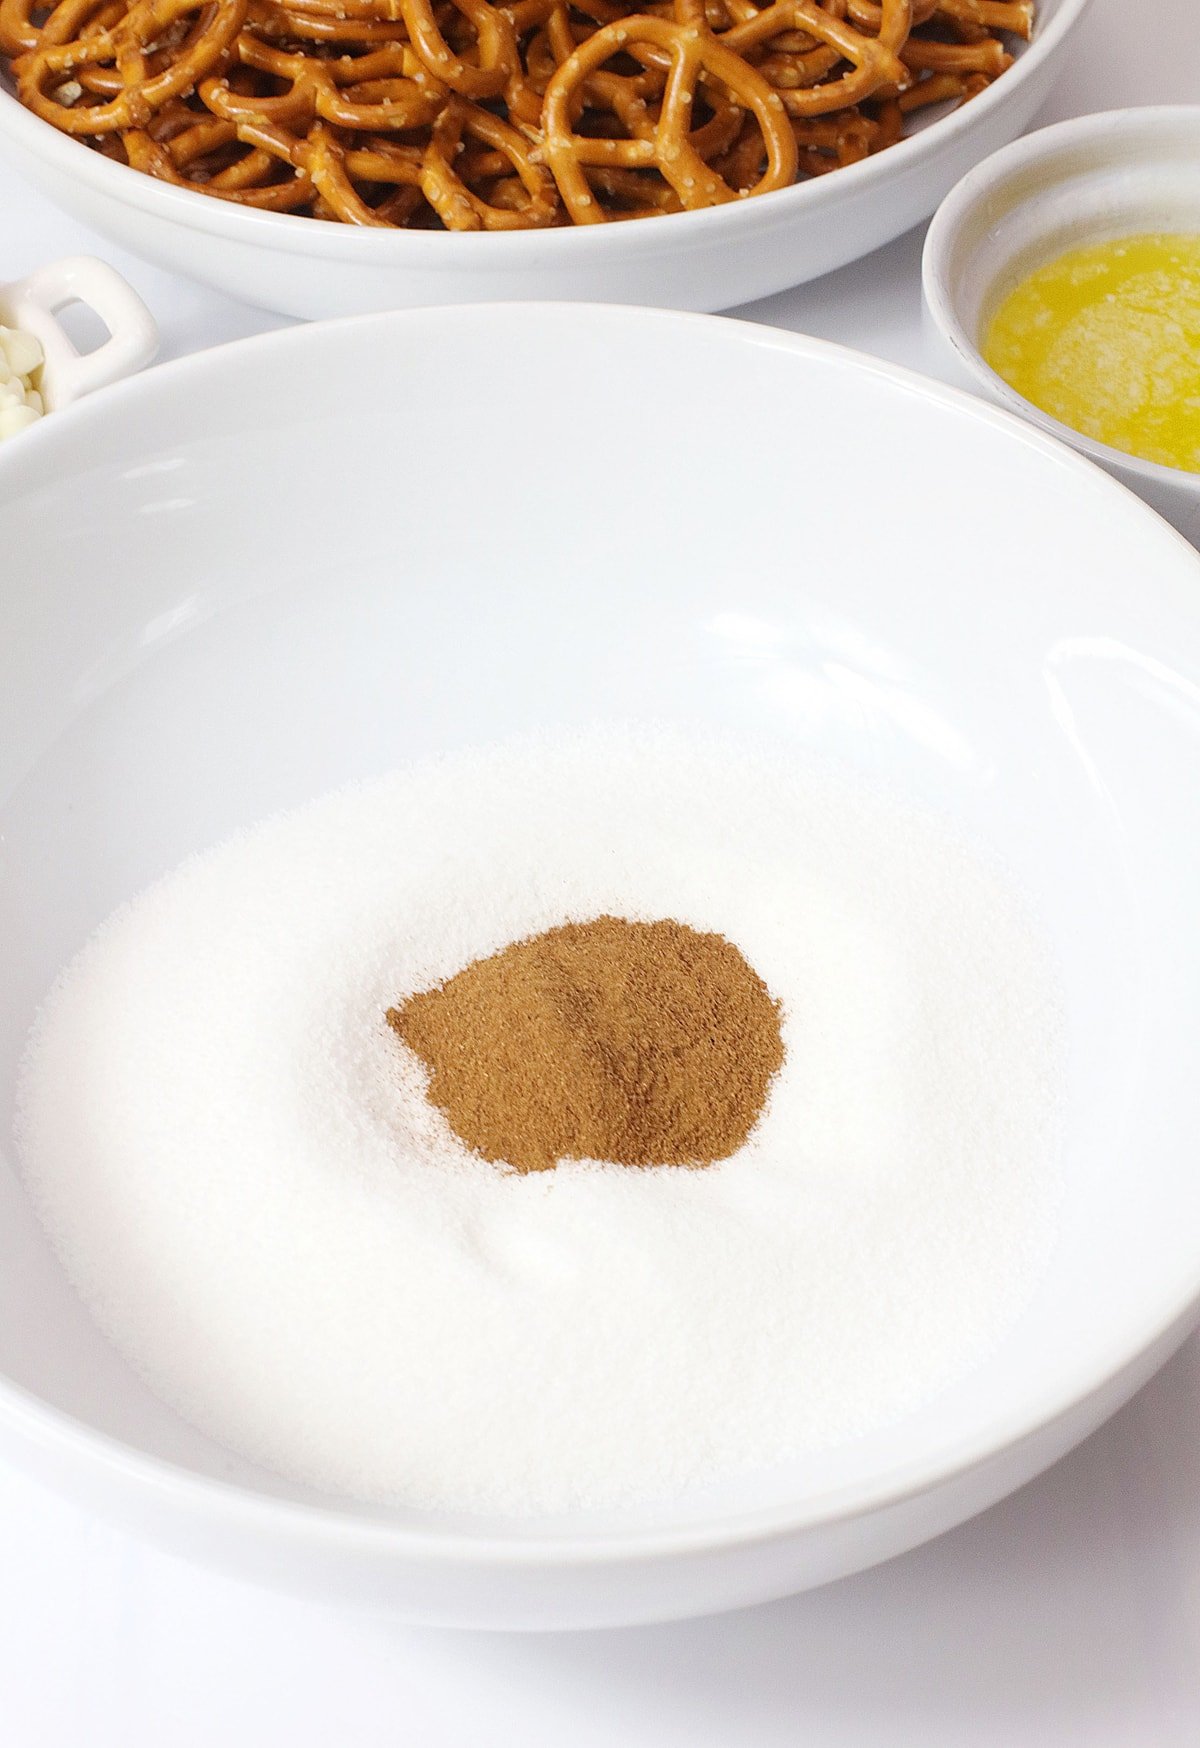 Cinnamon and sugar in a white bowl.